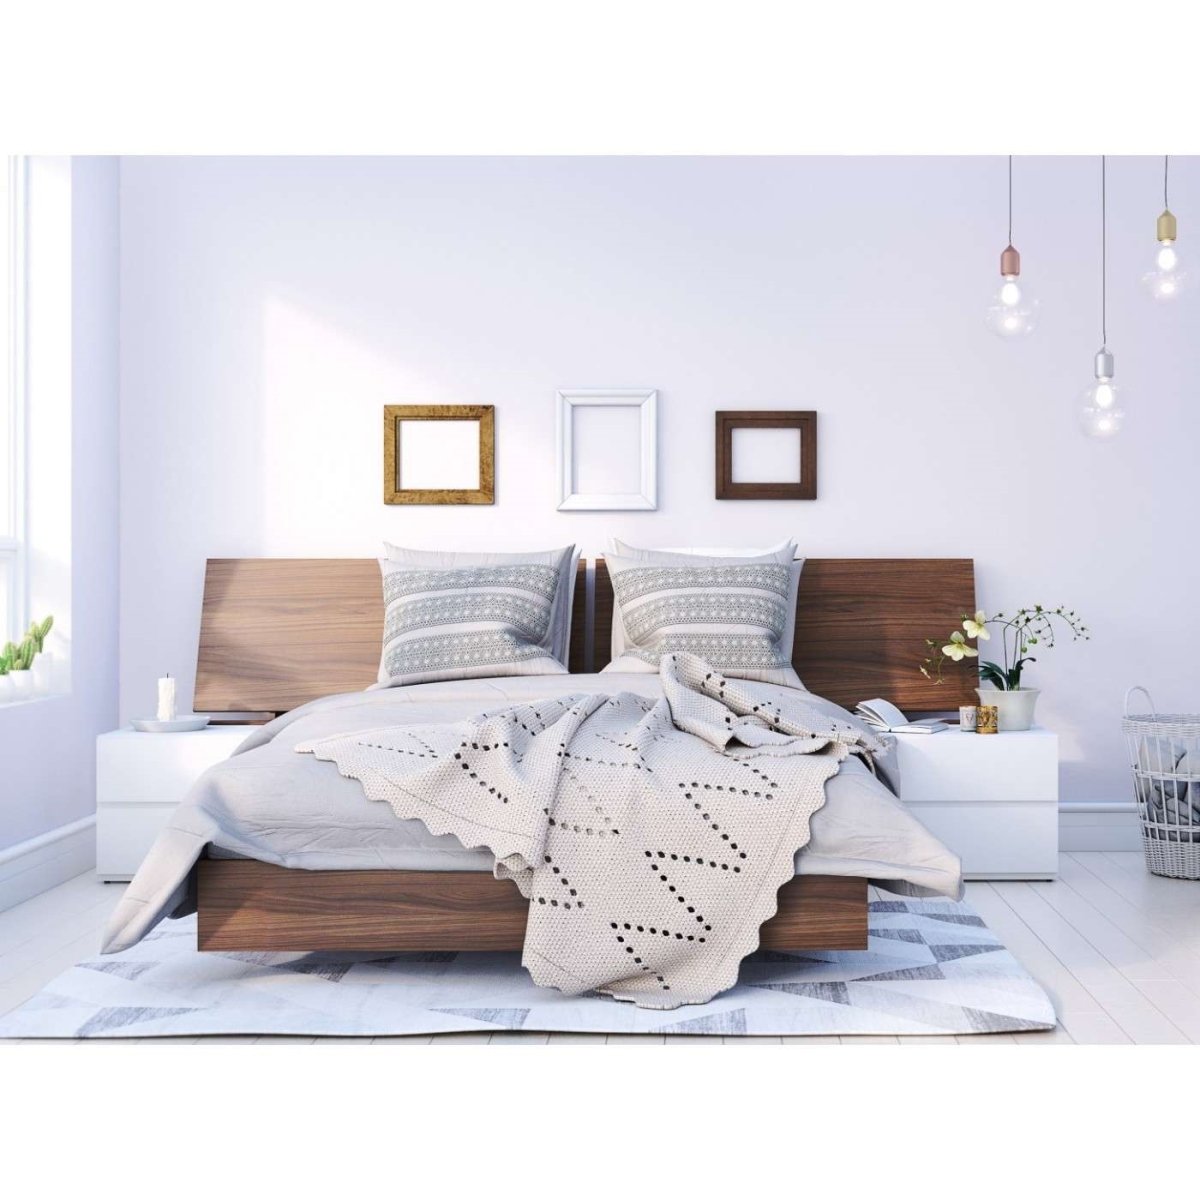 400868 Denali Bedroom Set, Walnut & White - Full Size